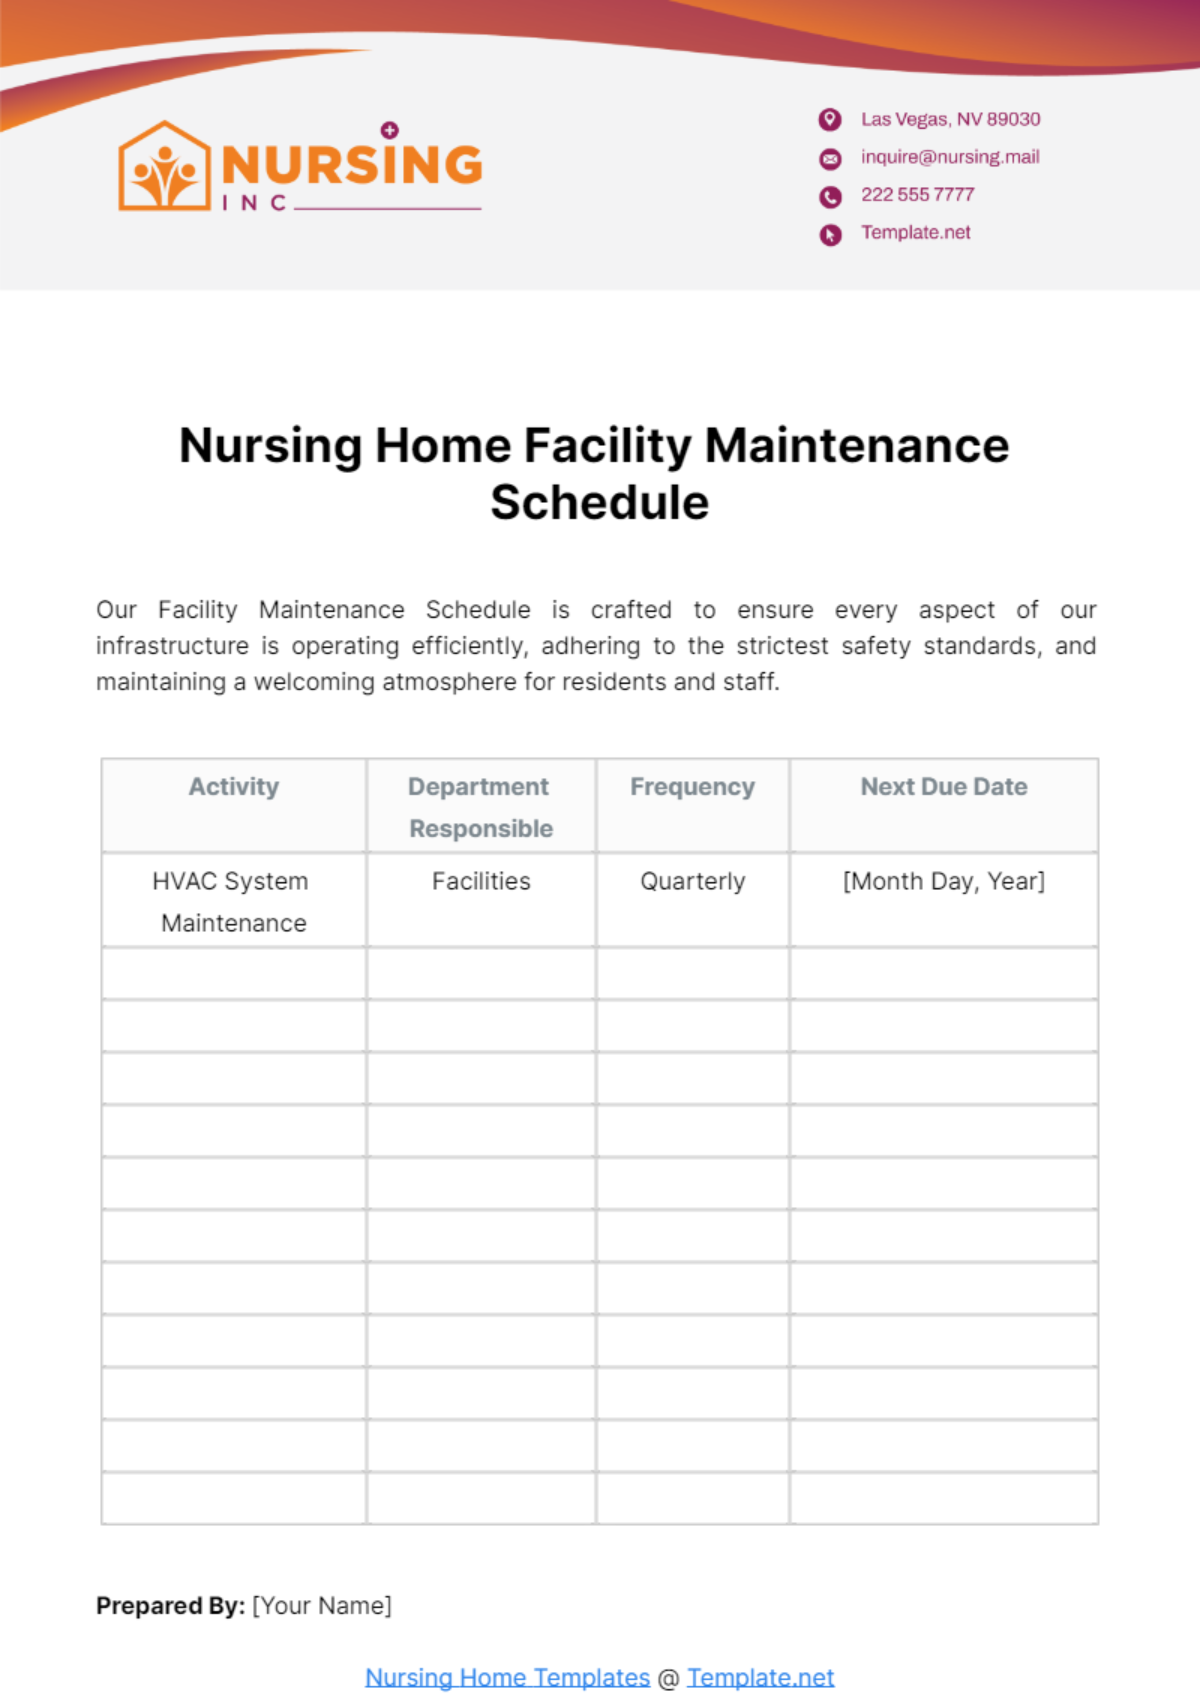 Nursing Home Facility Maintenance Schedule Template